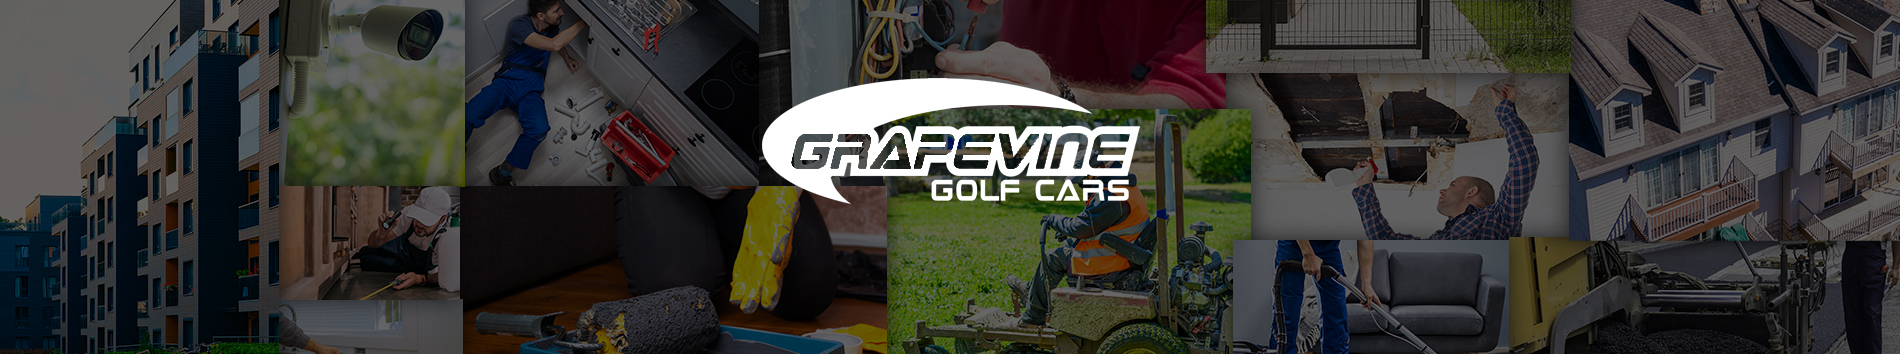 Grapevine Golf Cars